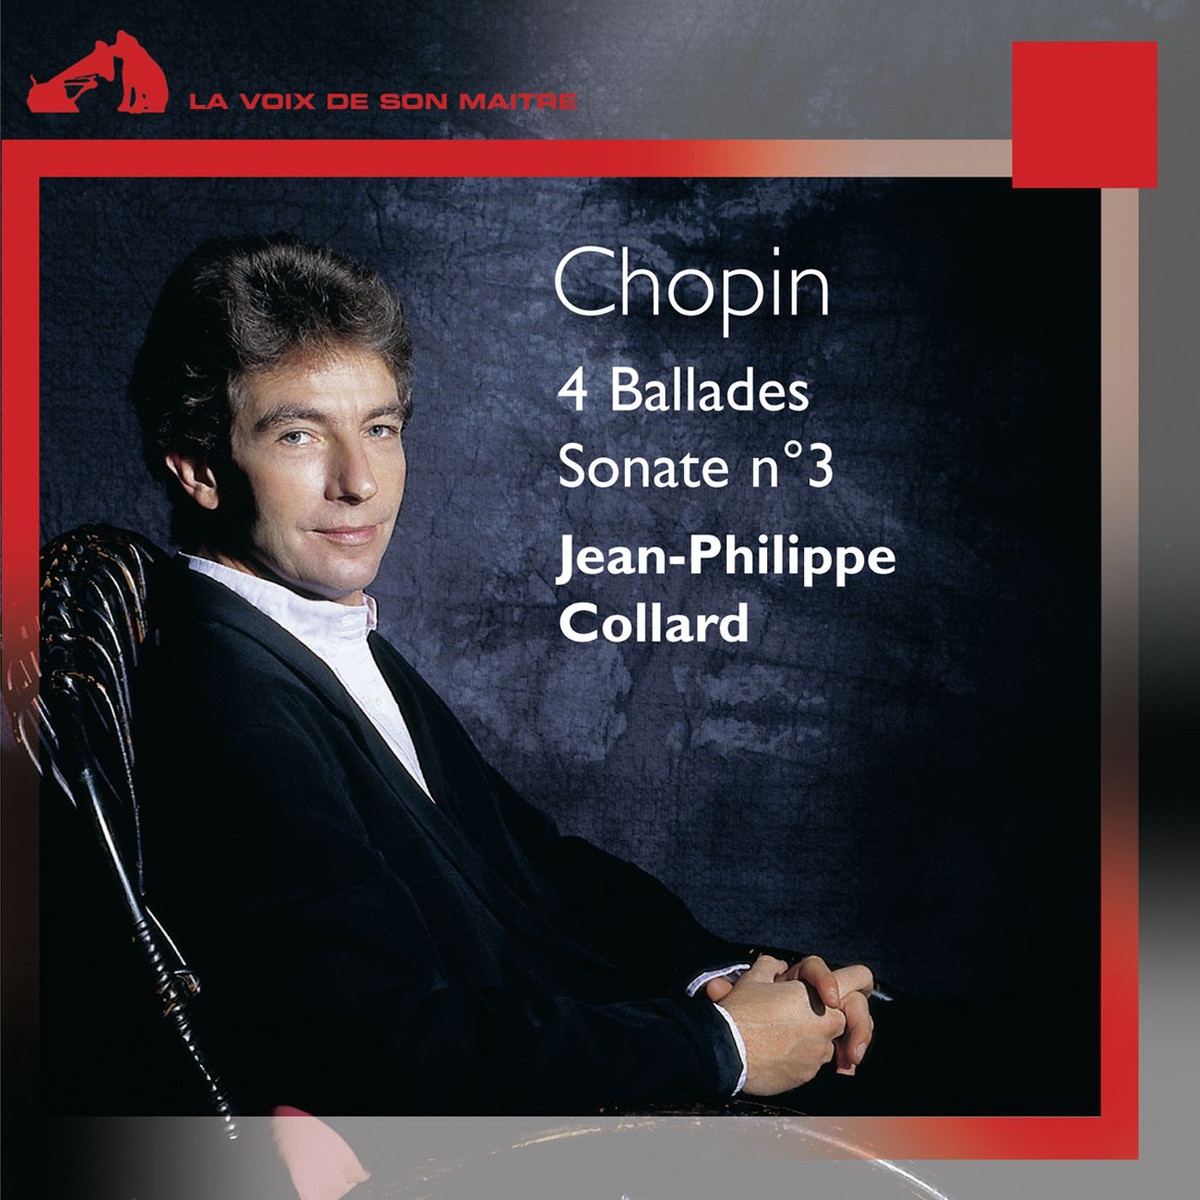 Chopin 4 Ballades Son 3